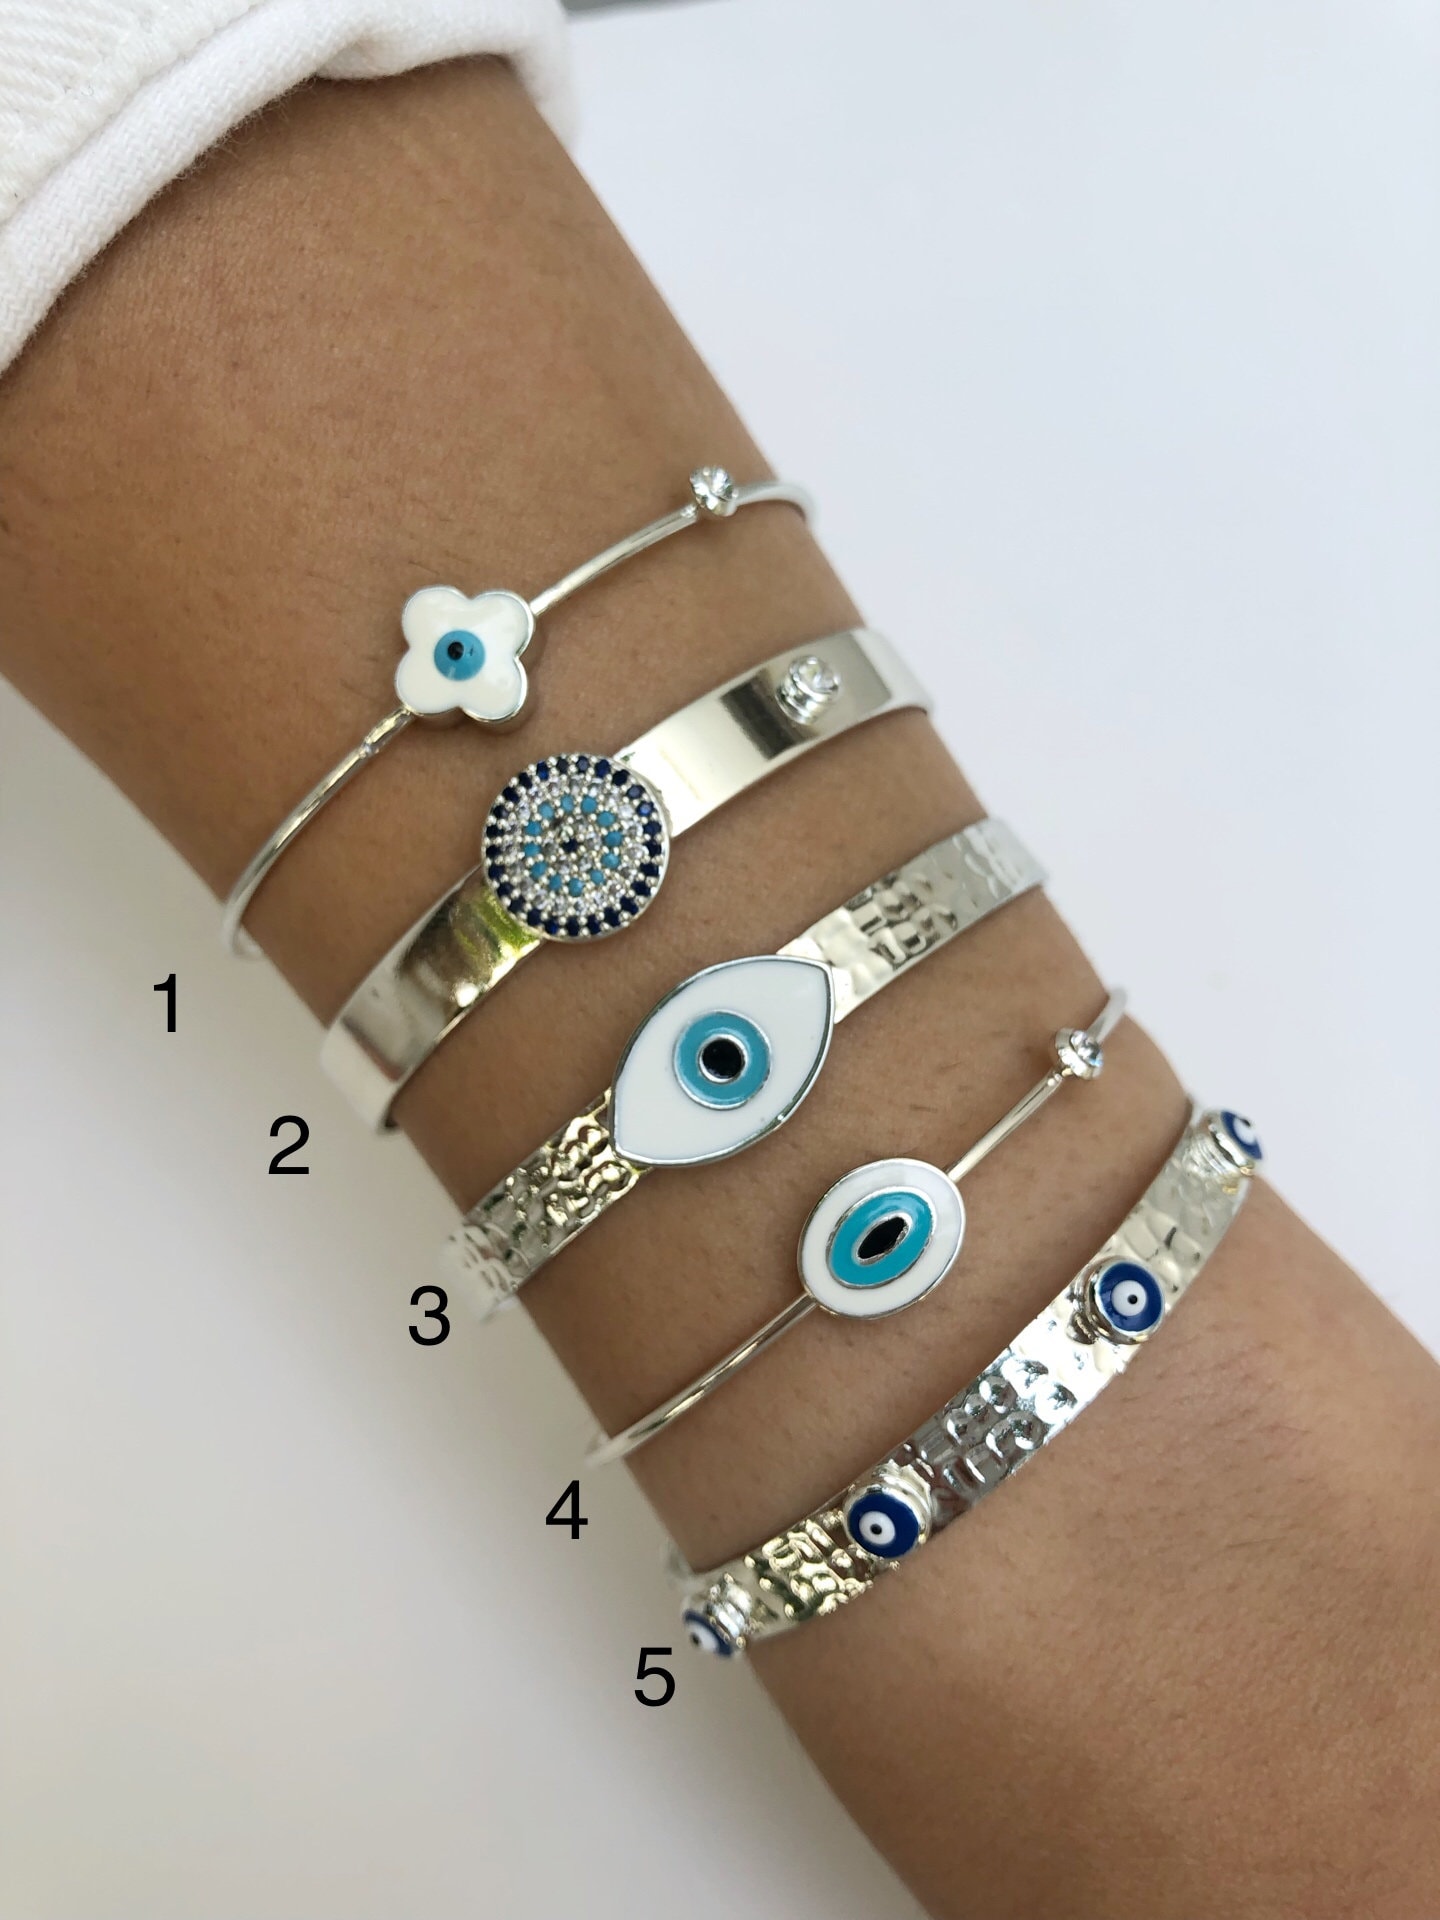 Willstar 450 Wholesale Evil Eye Beads for Bracelets NECKLACEBulk Evil Eye Beads for Jewelry Making, Evil Eye Charms 15 Colors(6mm), Size: 450pcs